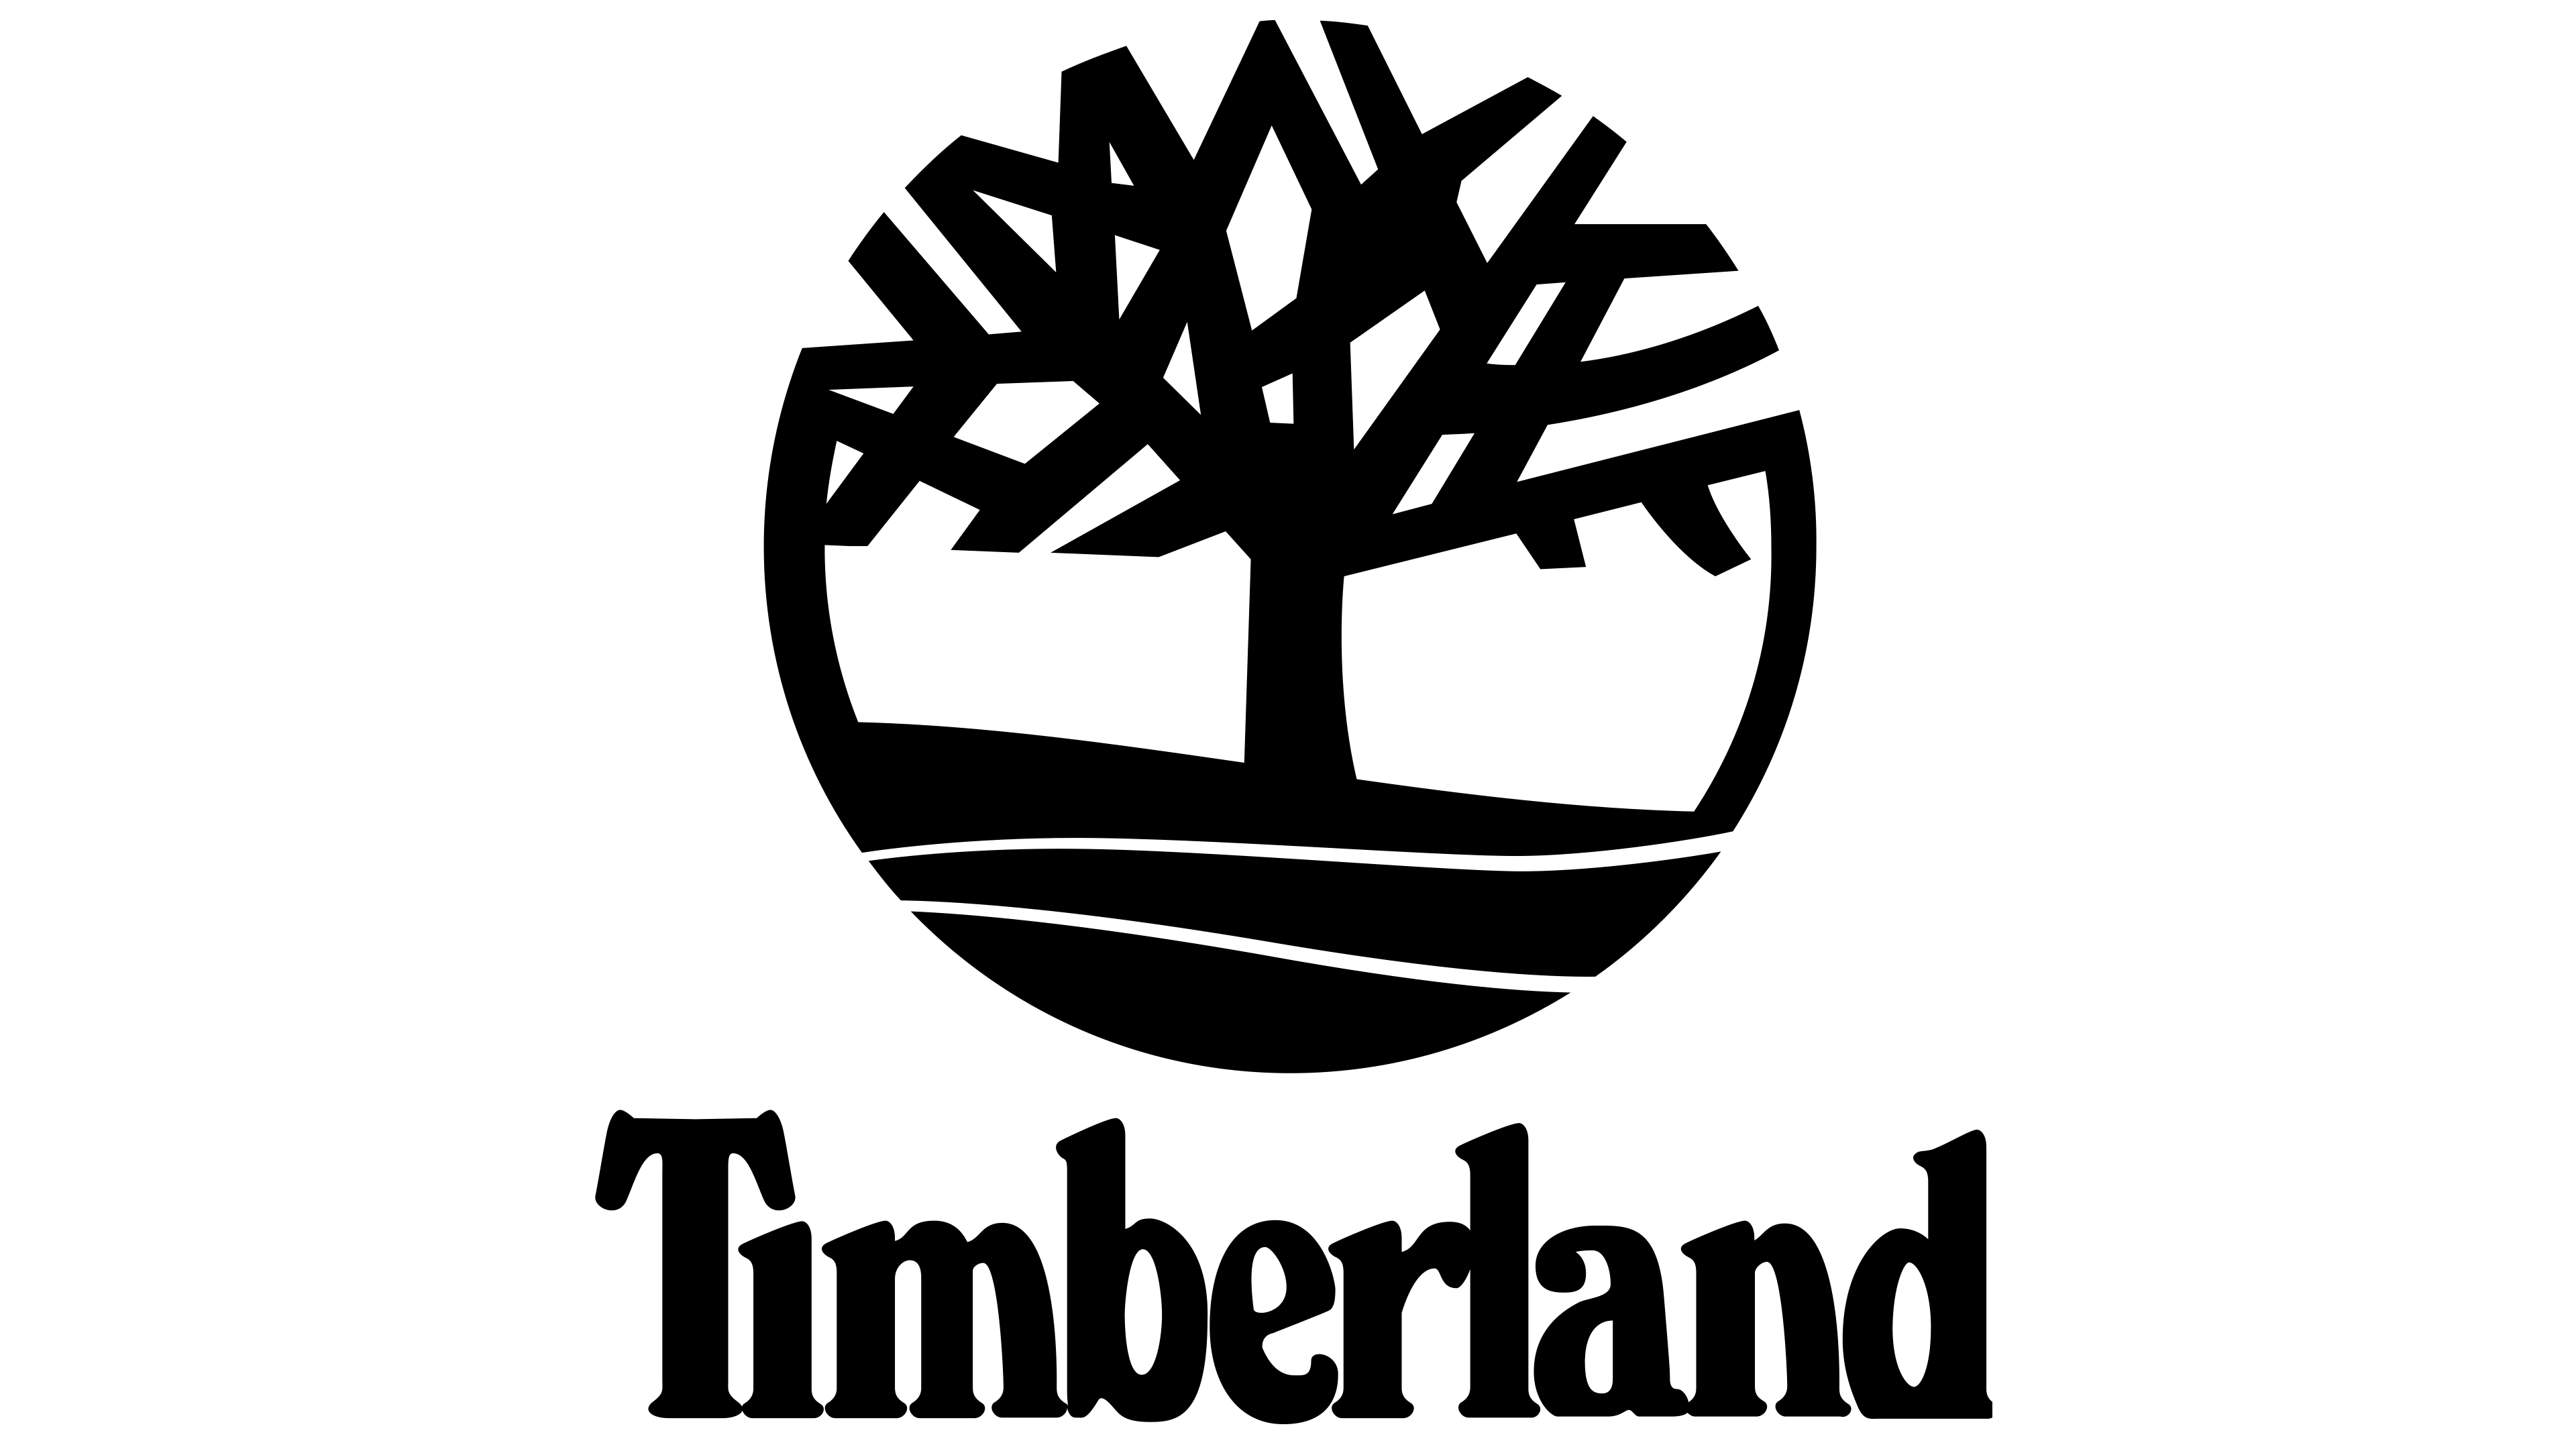 Timberland : Brand Short Description Type Here.